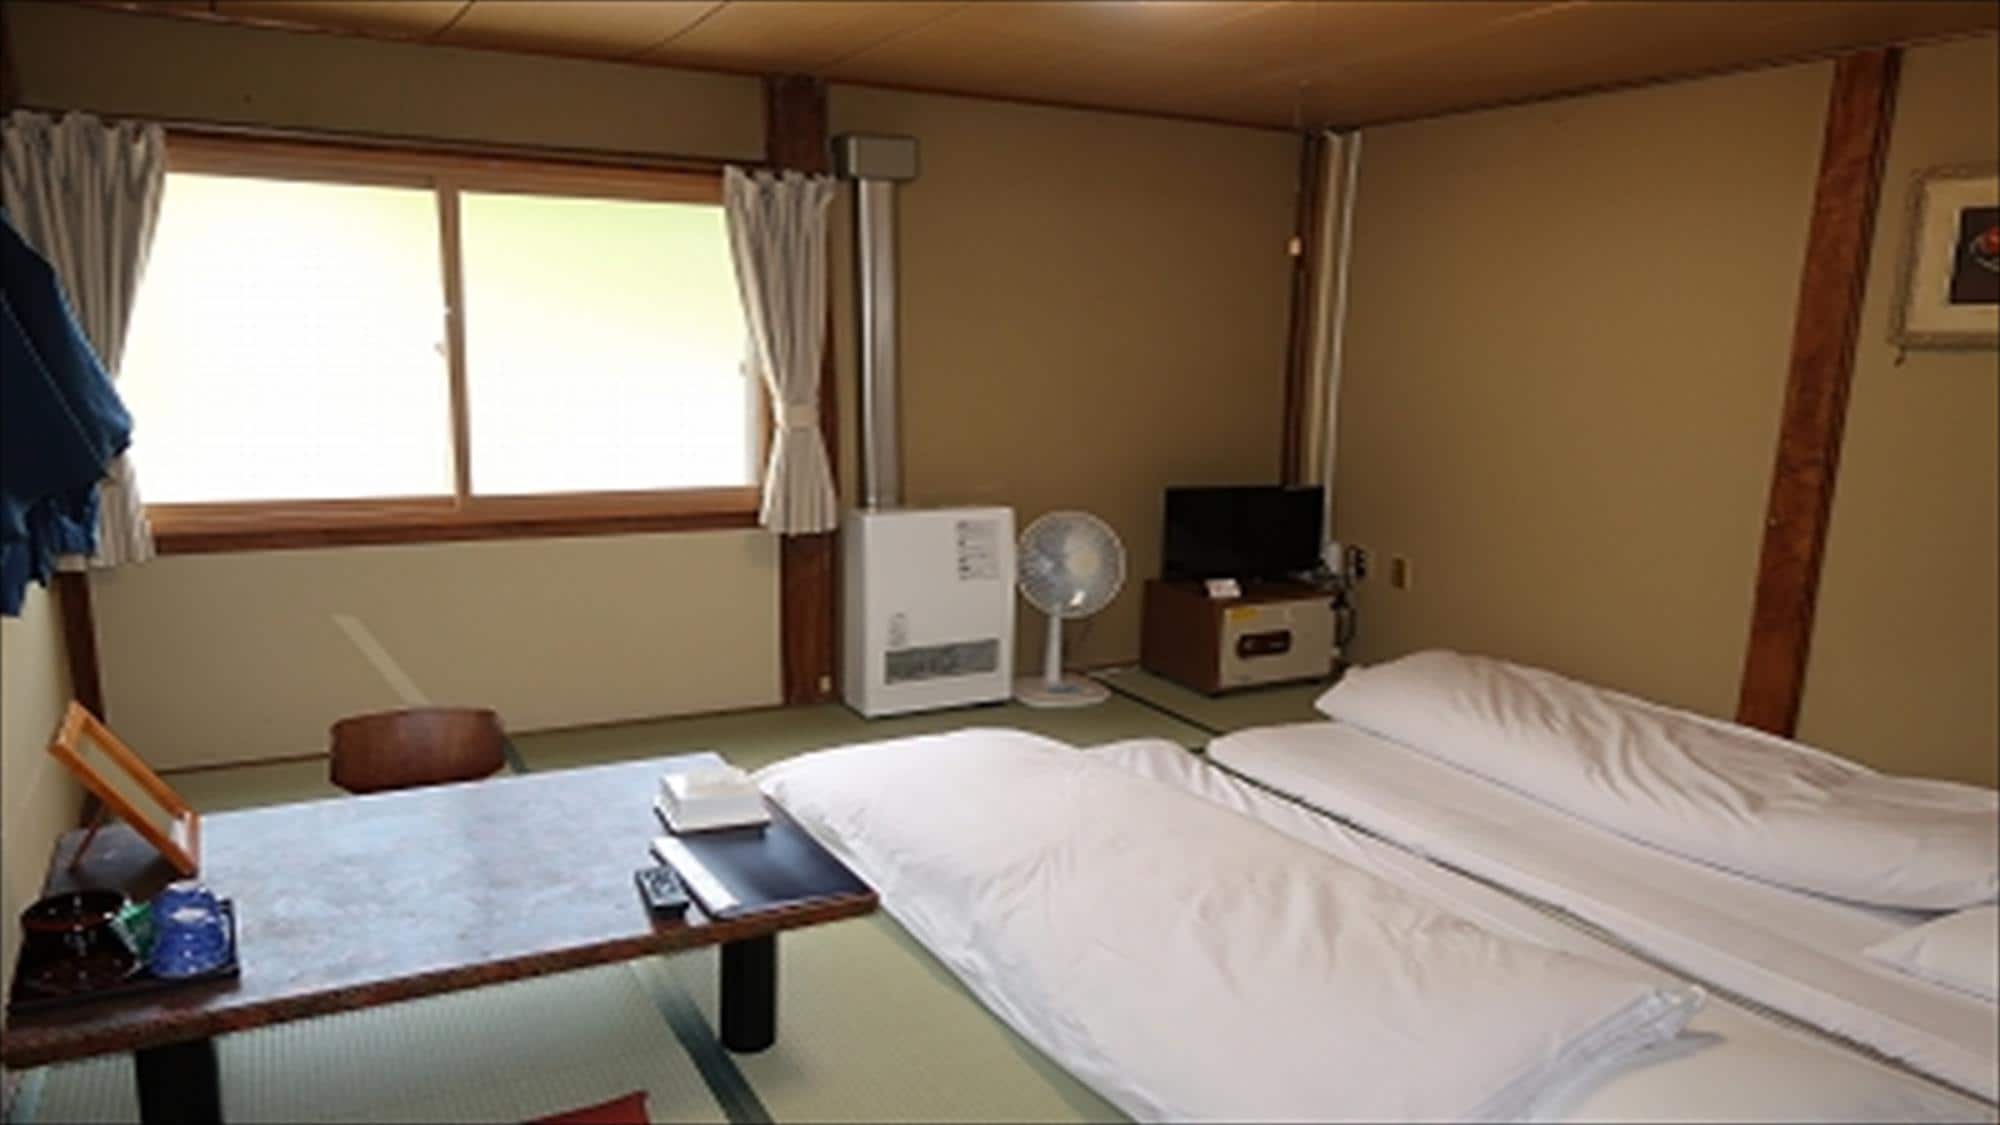  ◆ [Main Building] Japanese-style room 8 tatami mats